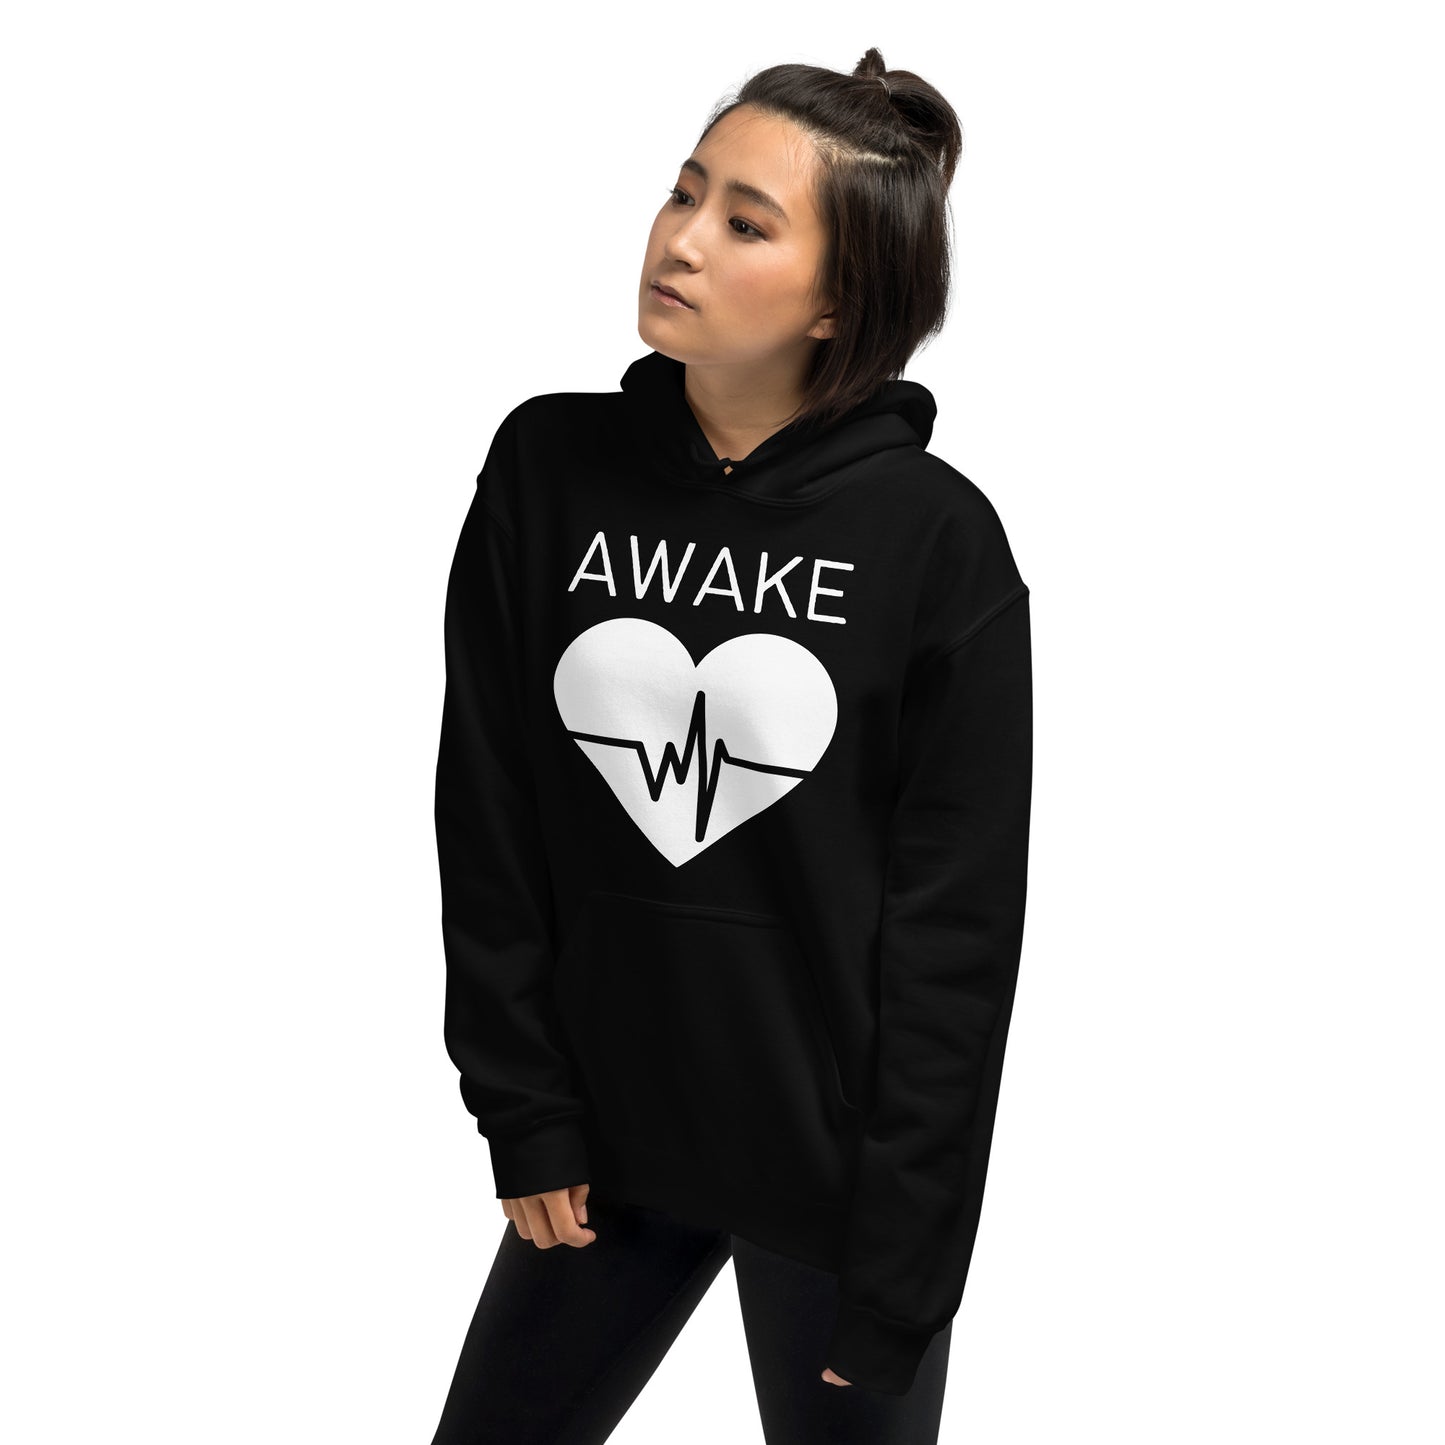 Awake Unisex Hoodie, Beating Heart Design, Inspirational Message